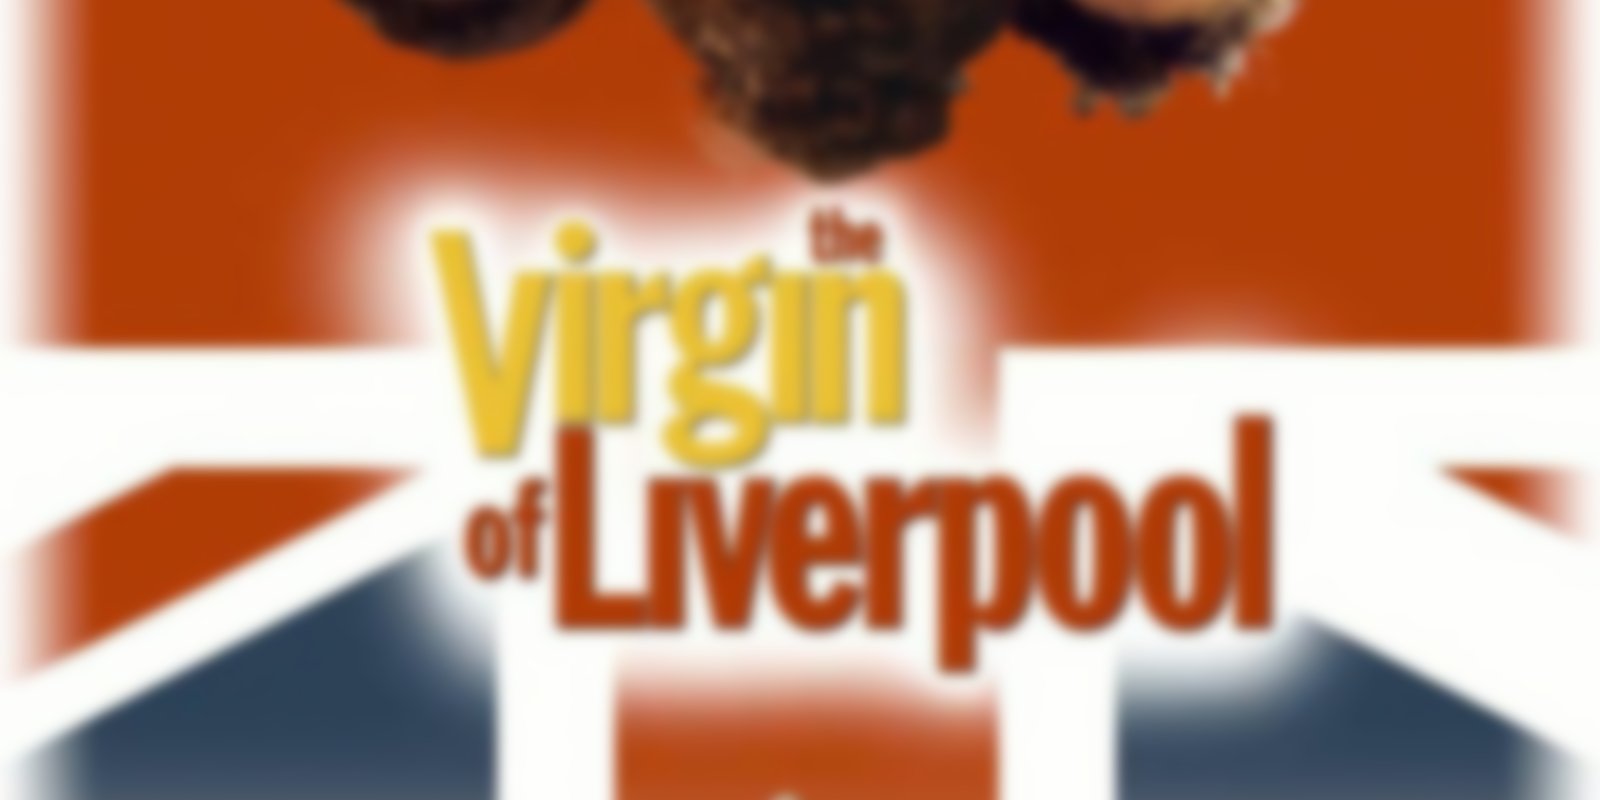 The Virgin of Liverpool